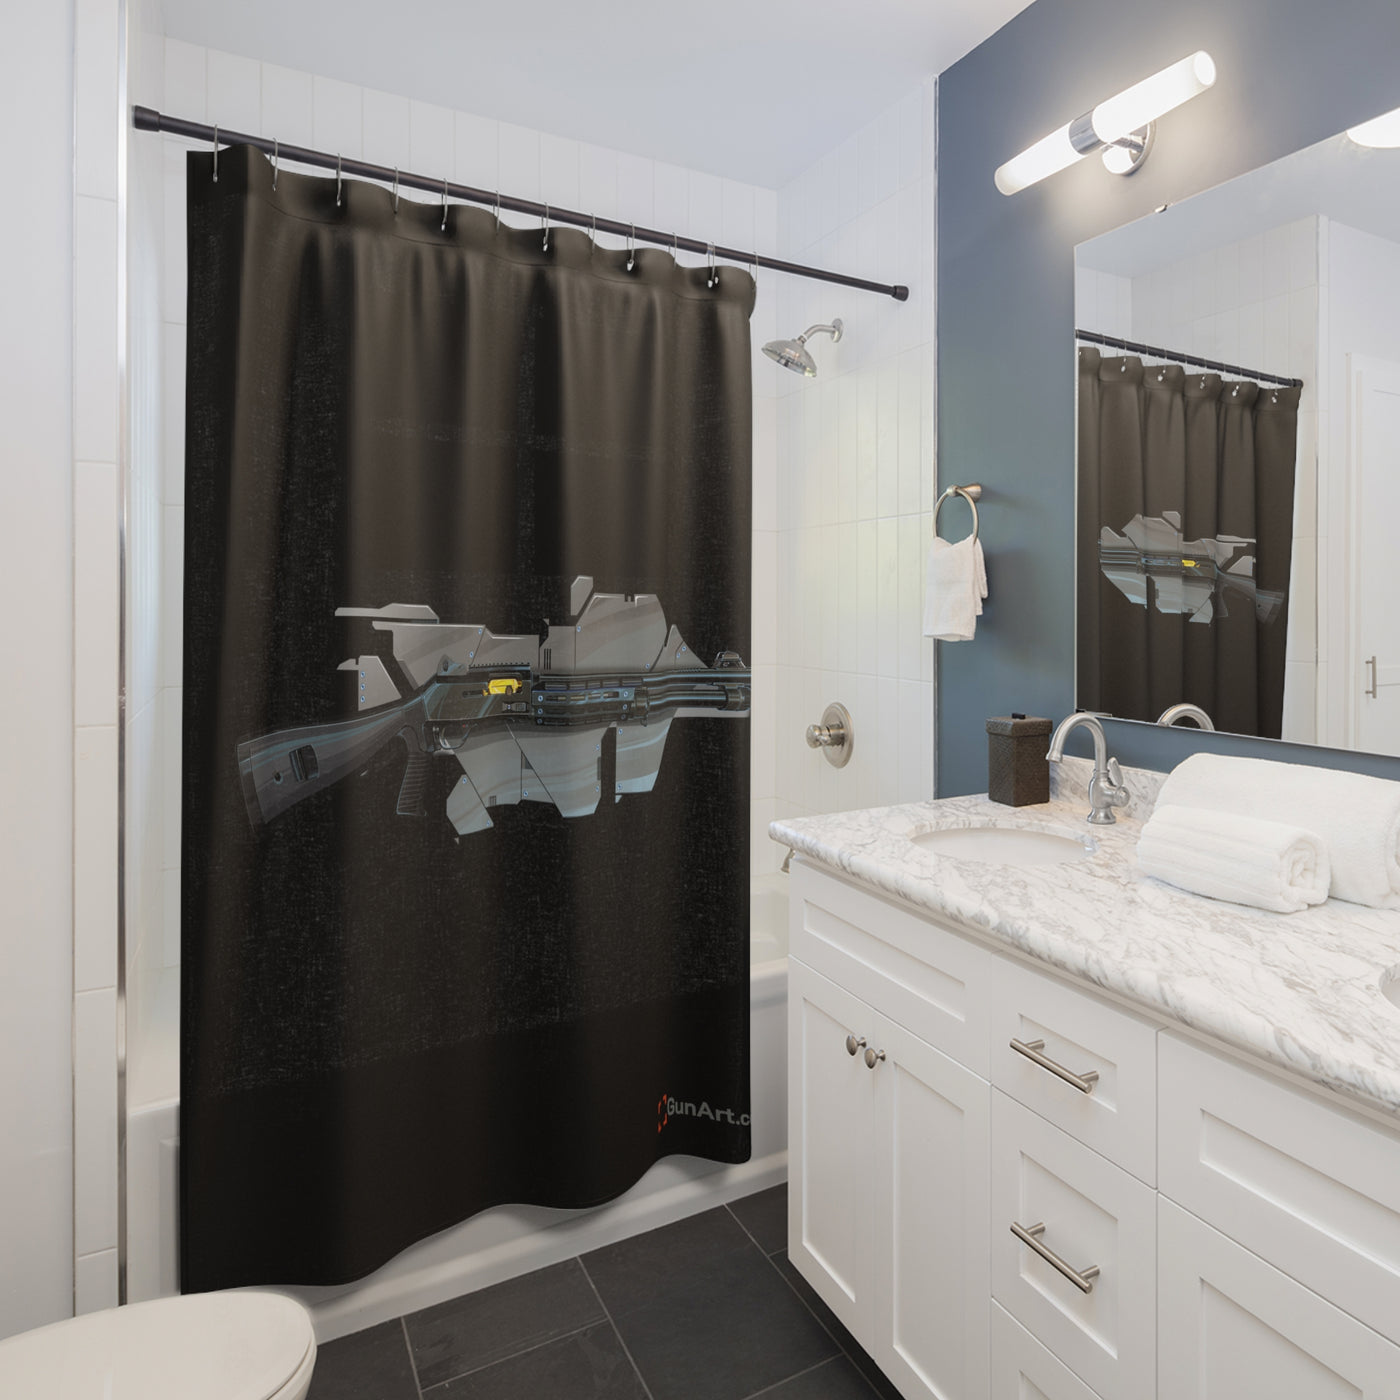 Special Ops Shotgun 12 Gauge Shower Curtains - Black Background